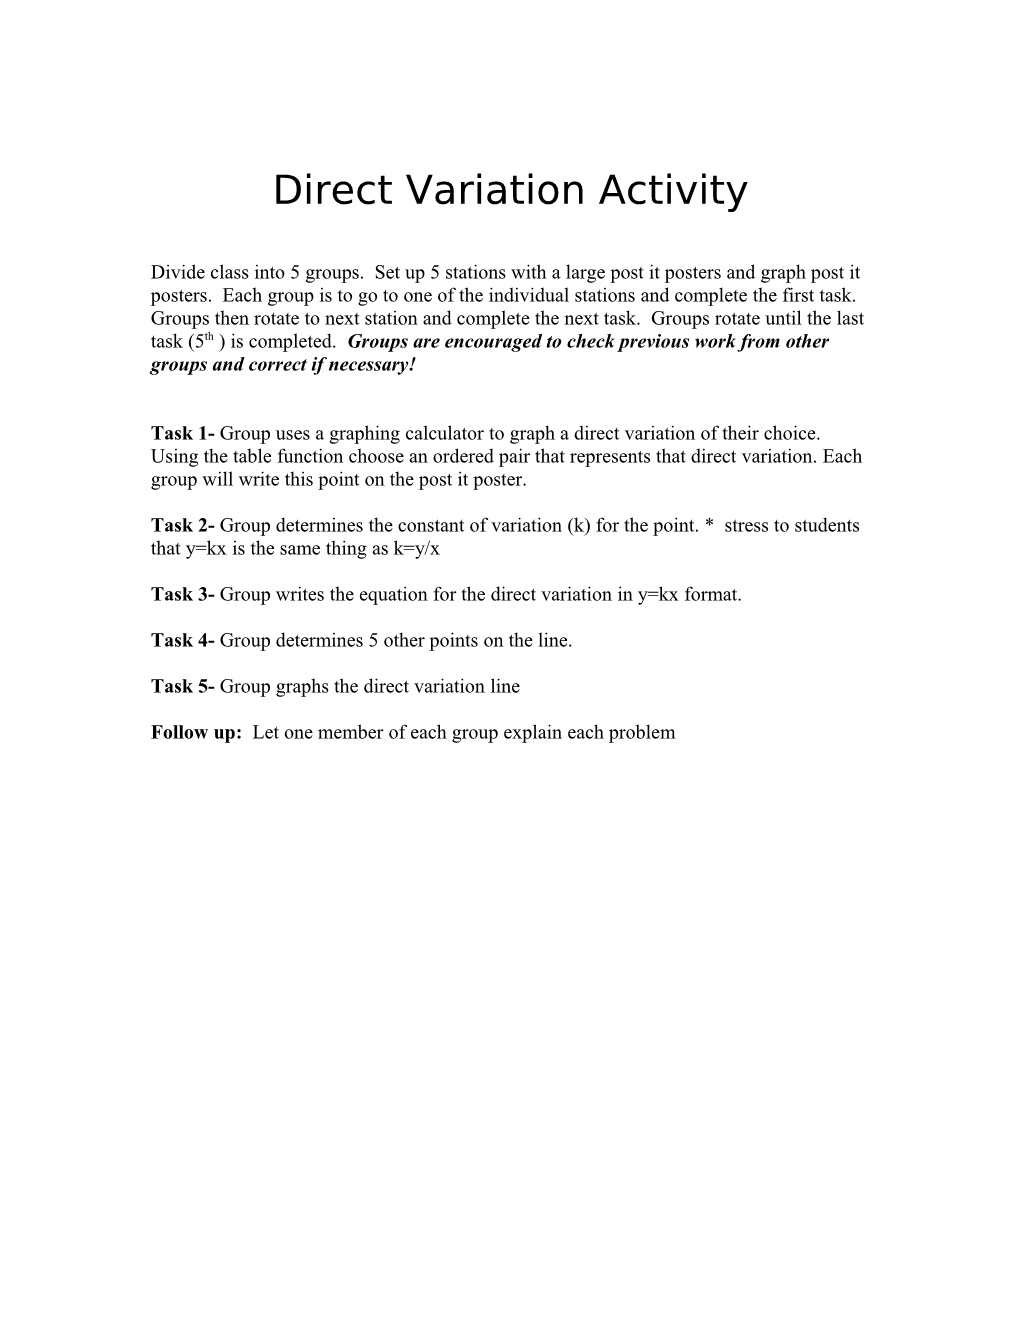 Direct Variation Activity